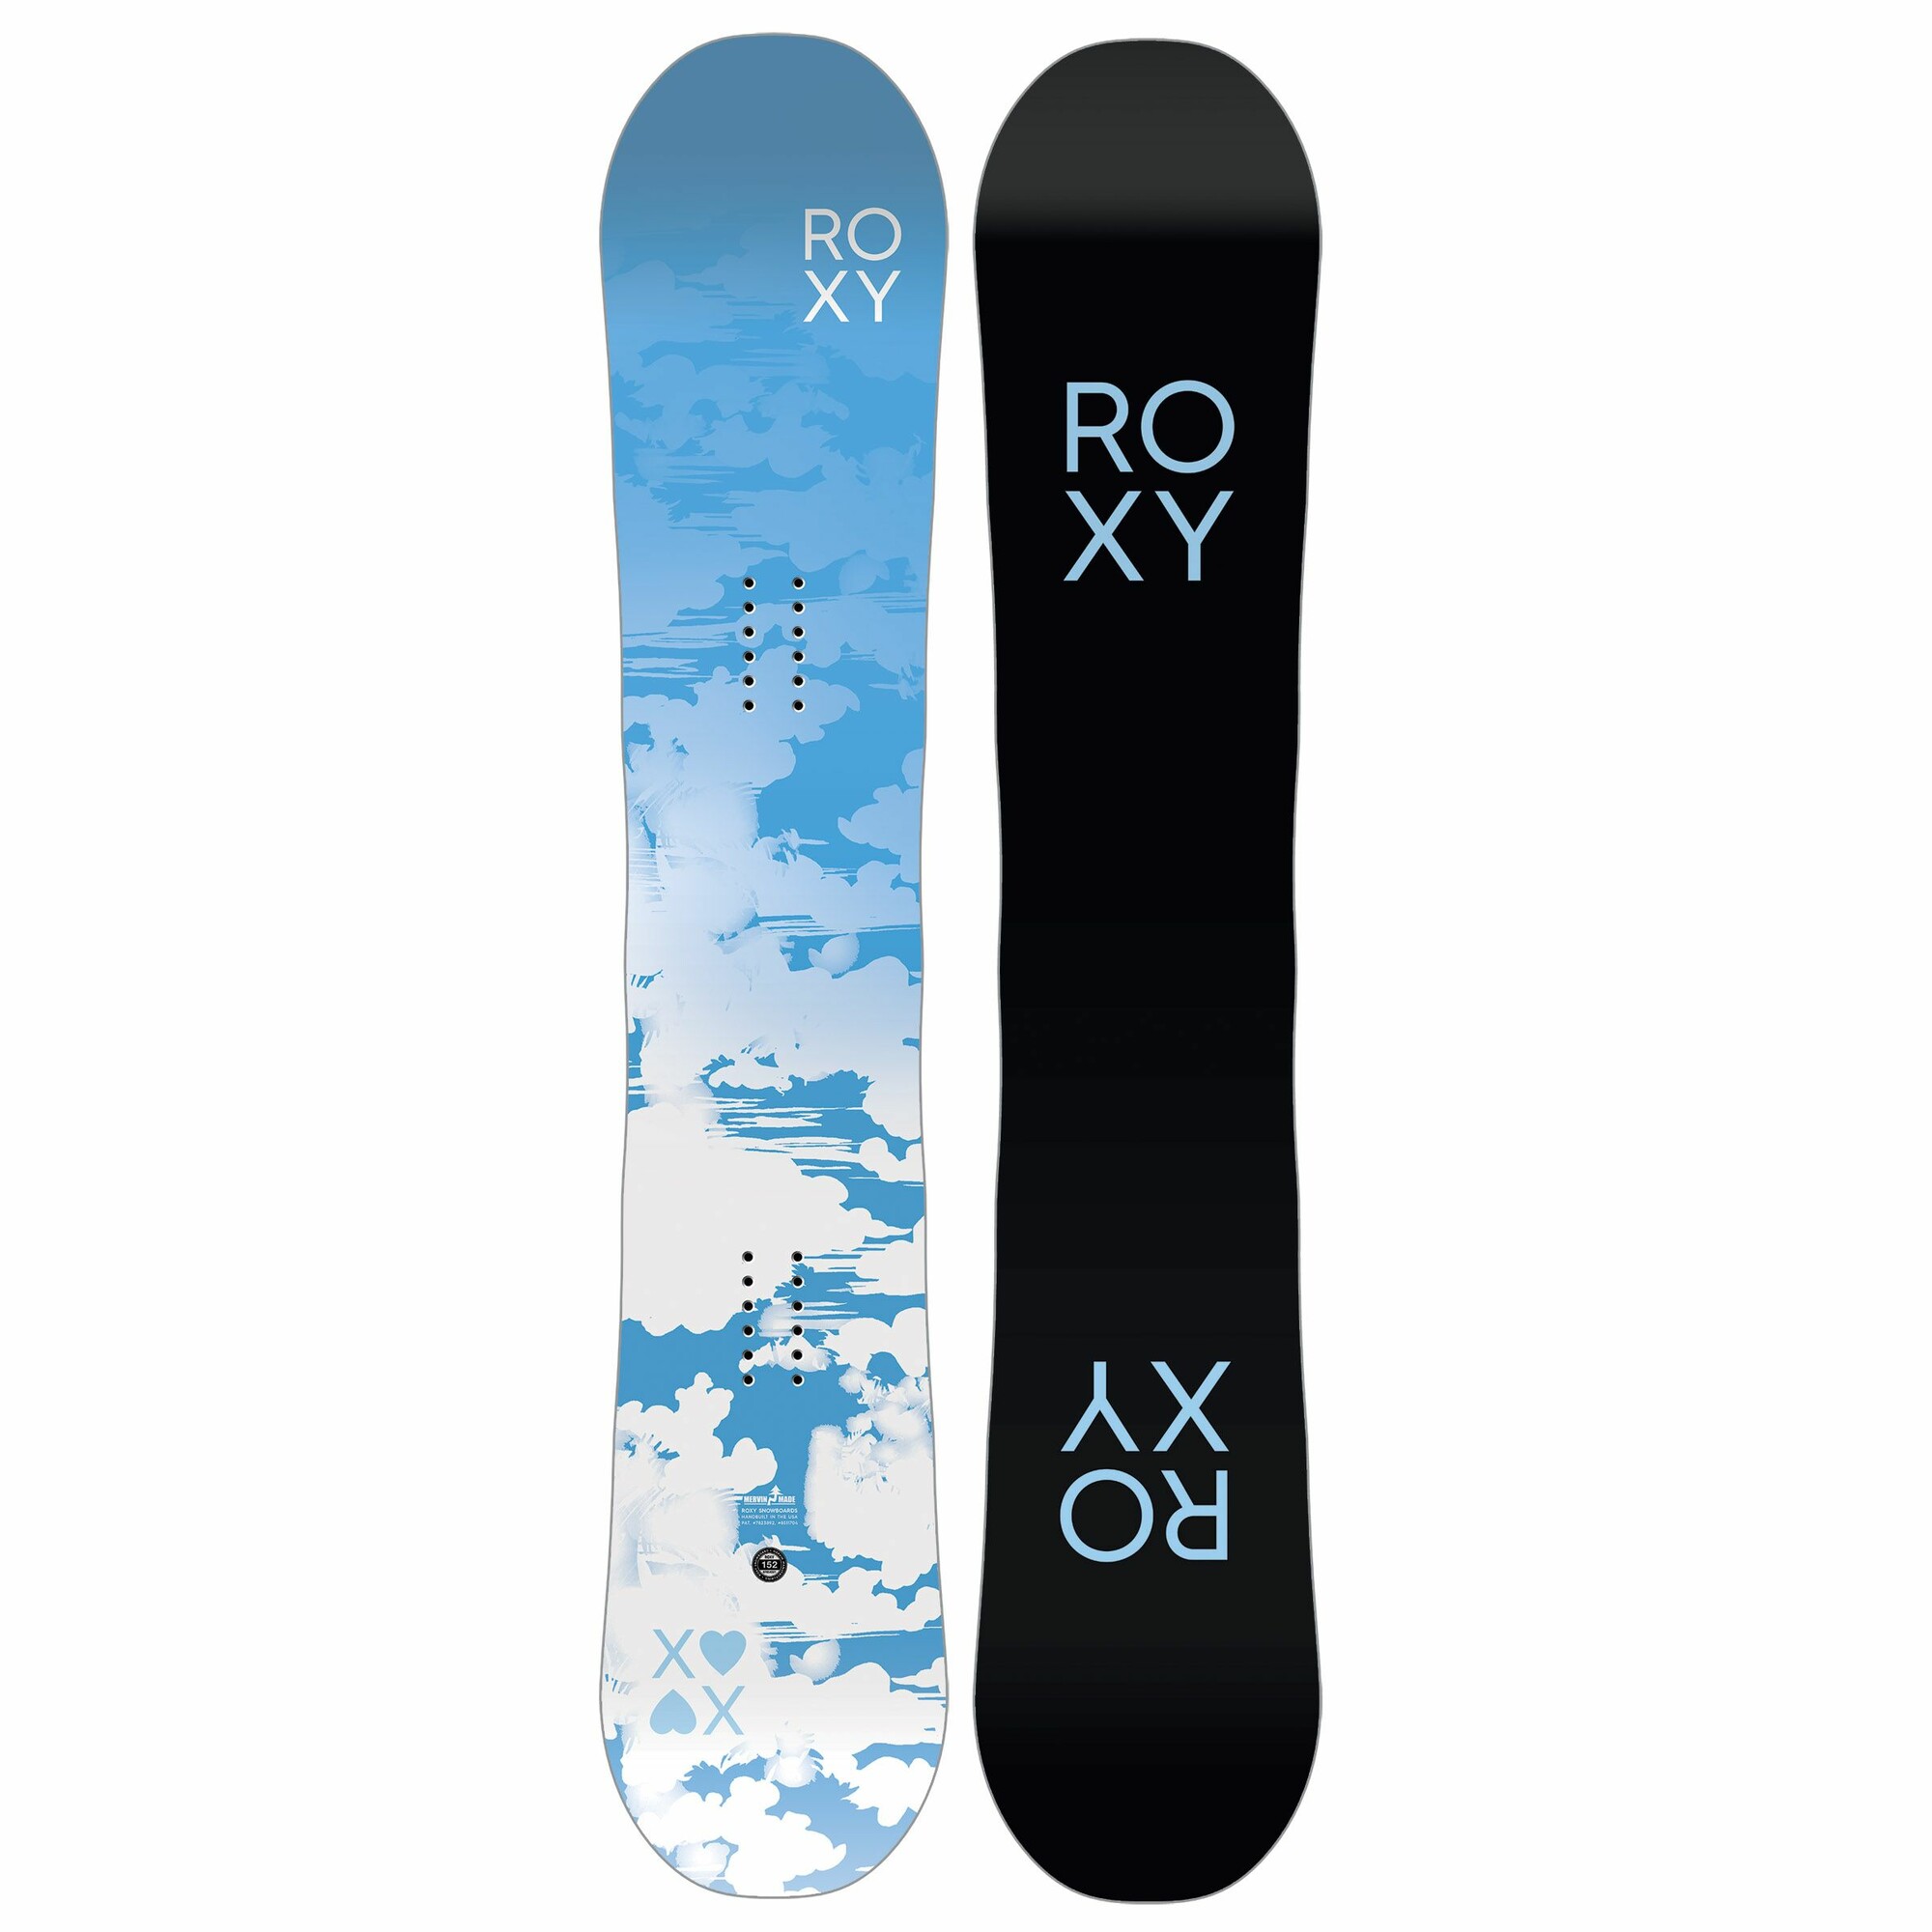 Roxy XOXO Pro snowboard